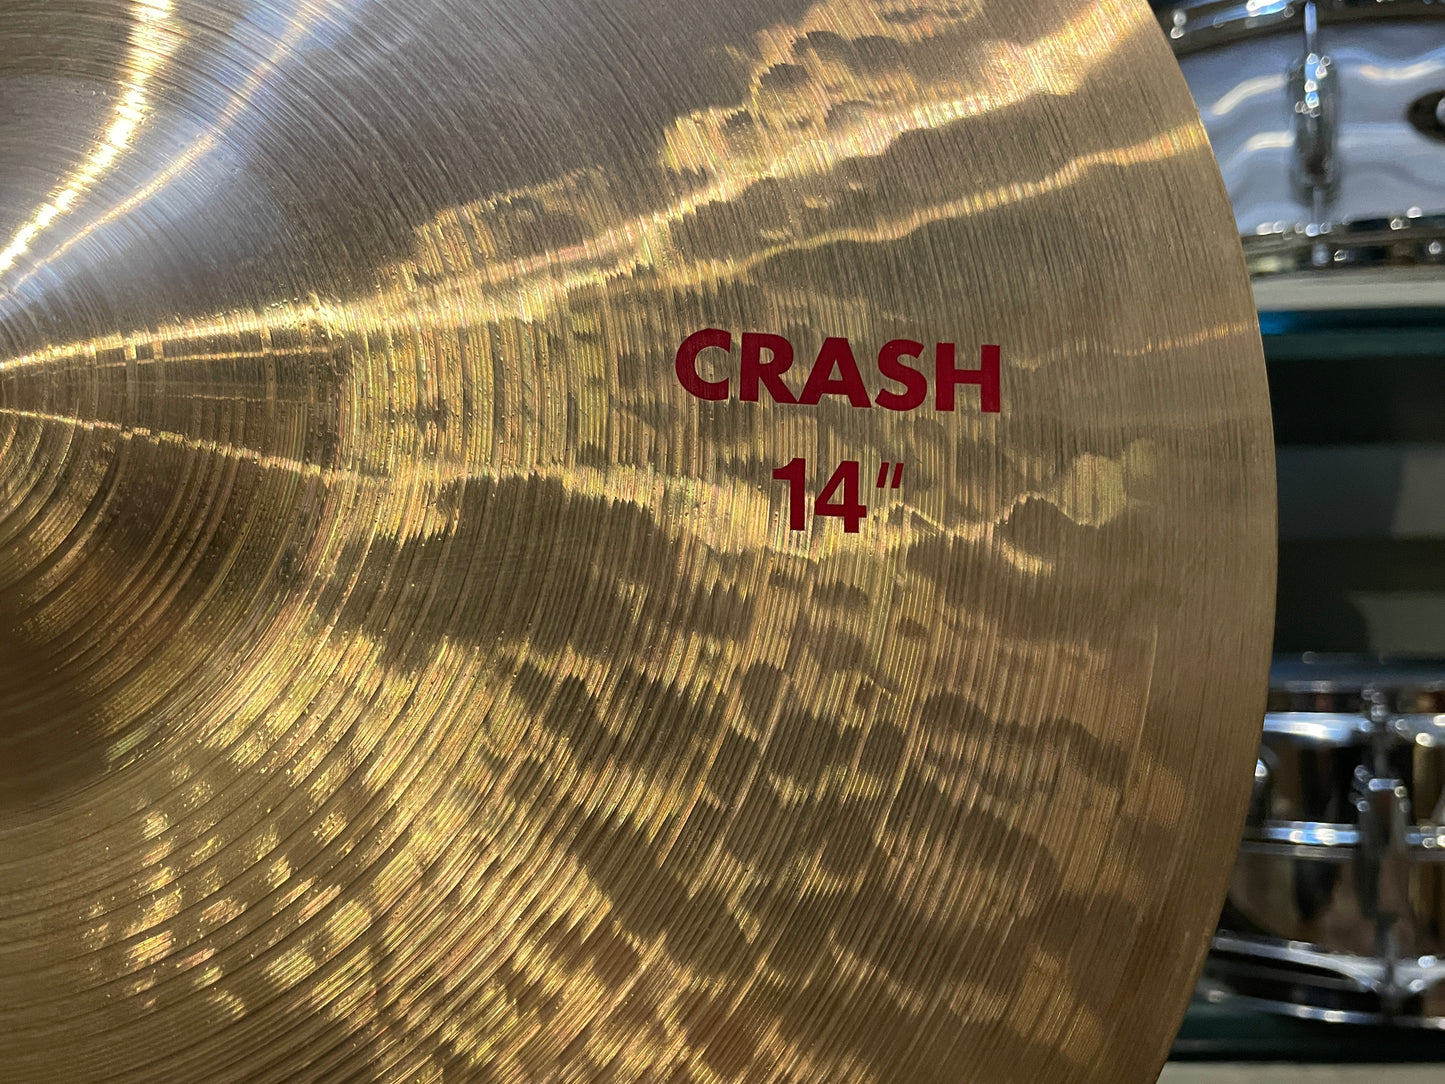 14" Paiste 2002 Crash Cymbal 764g